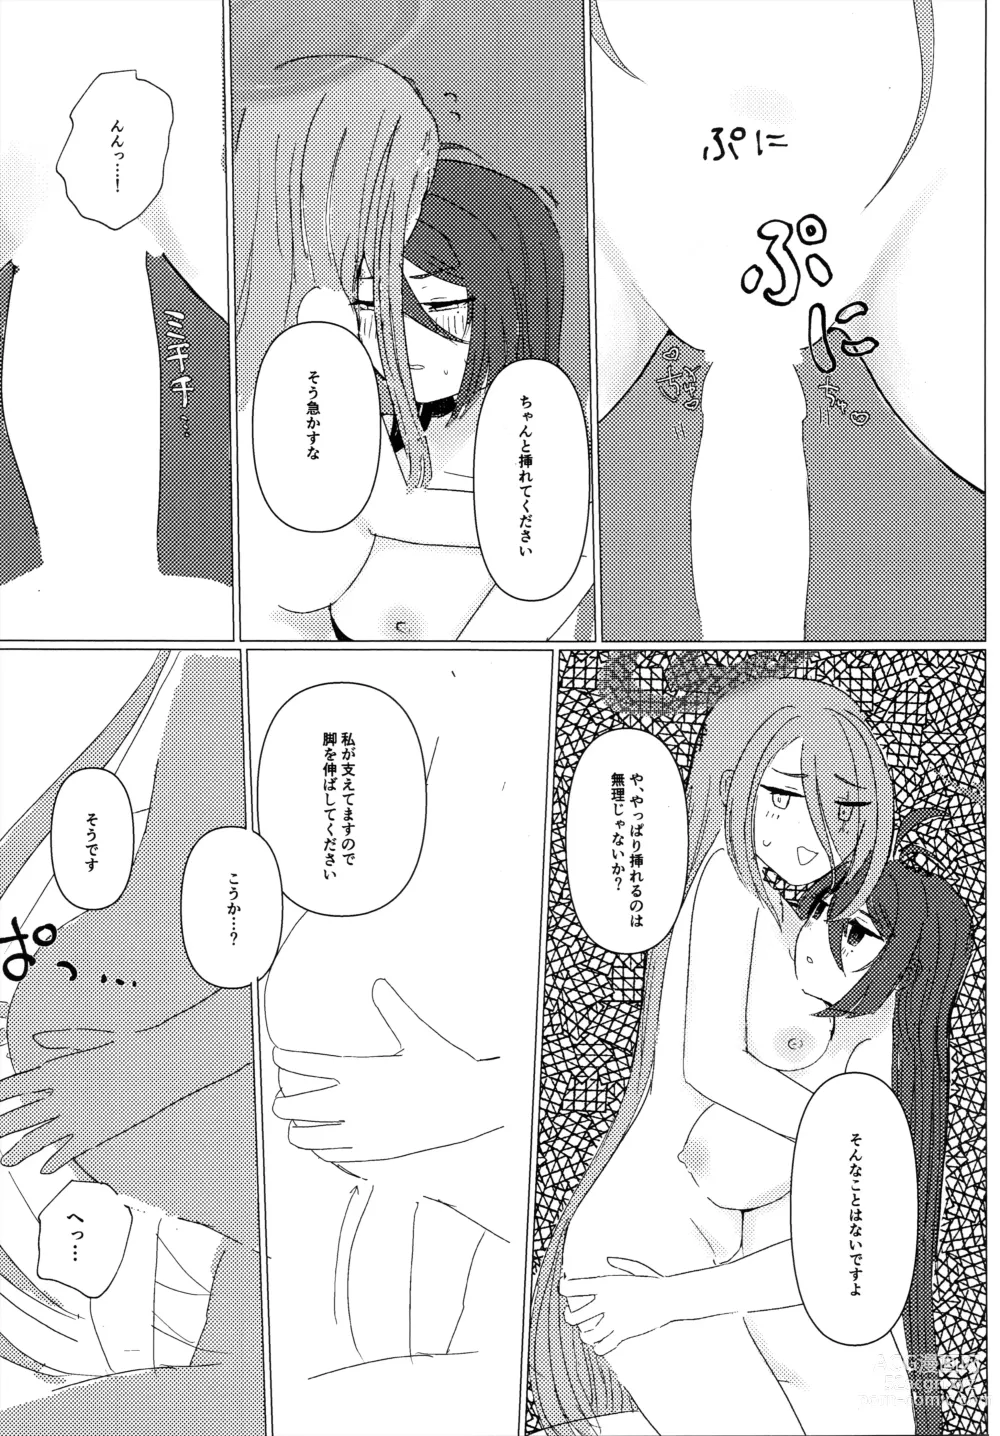 Page 14 of doujinshi Doushite Kou Natta!?